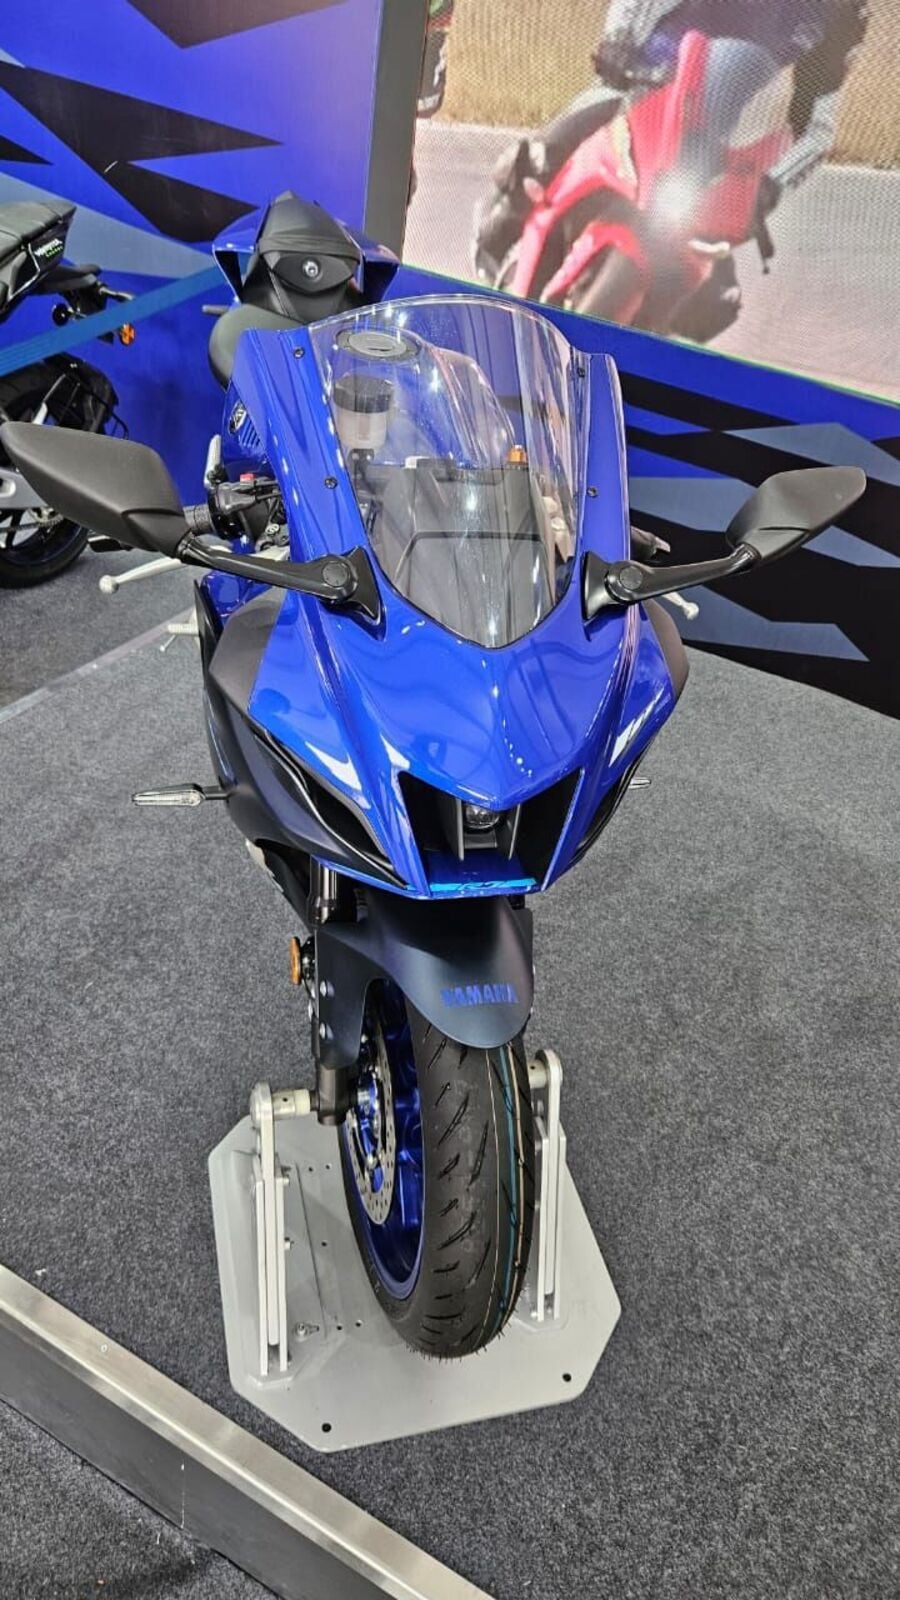 Yamaha R7 showcased at MotoGP Bharat 2023. India launch soon?